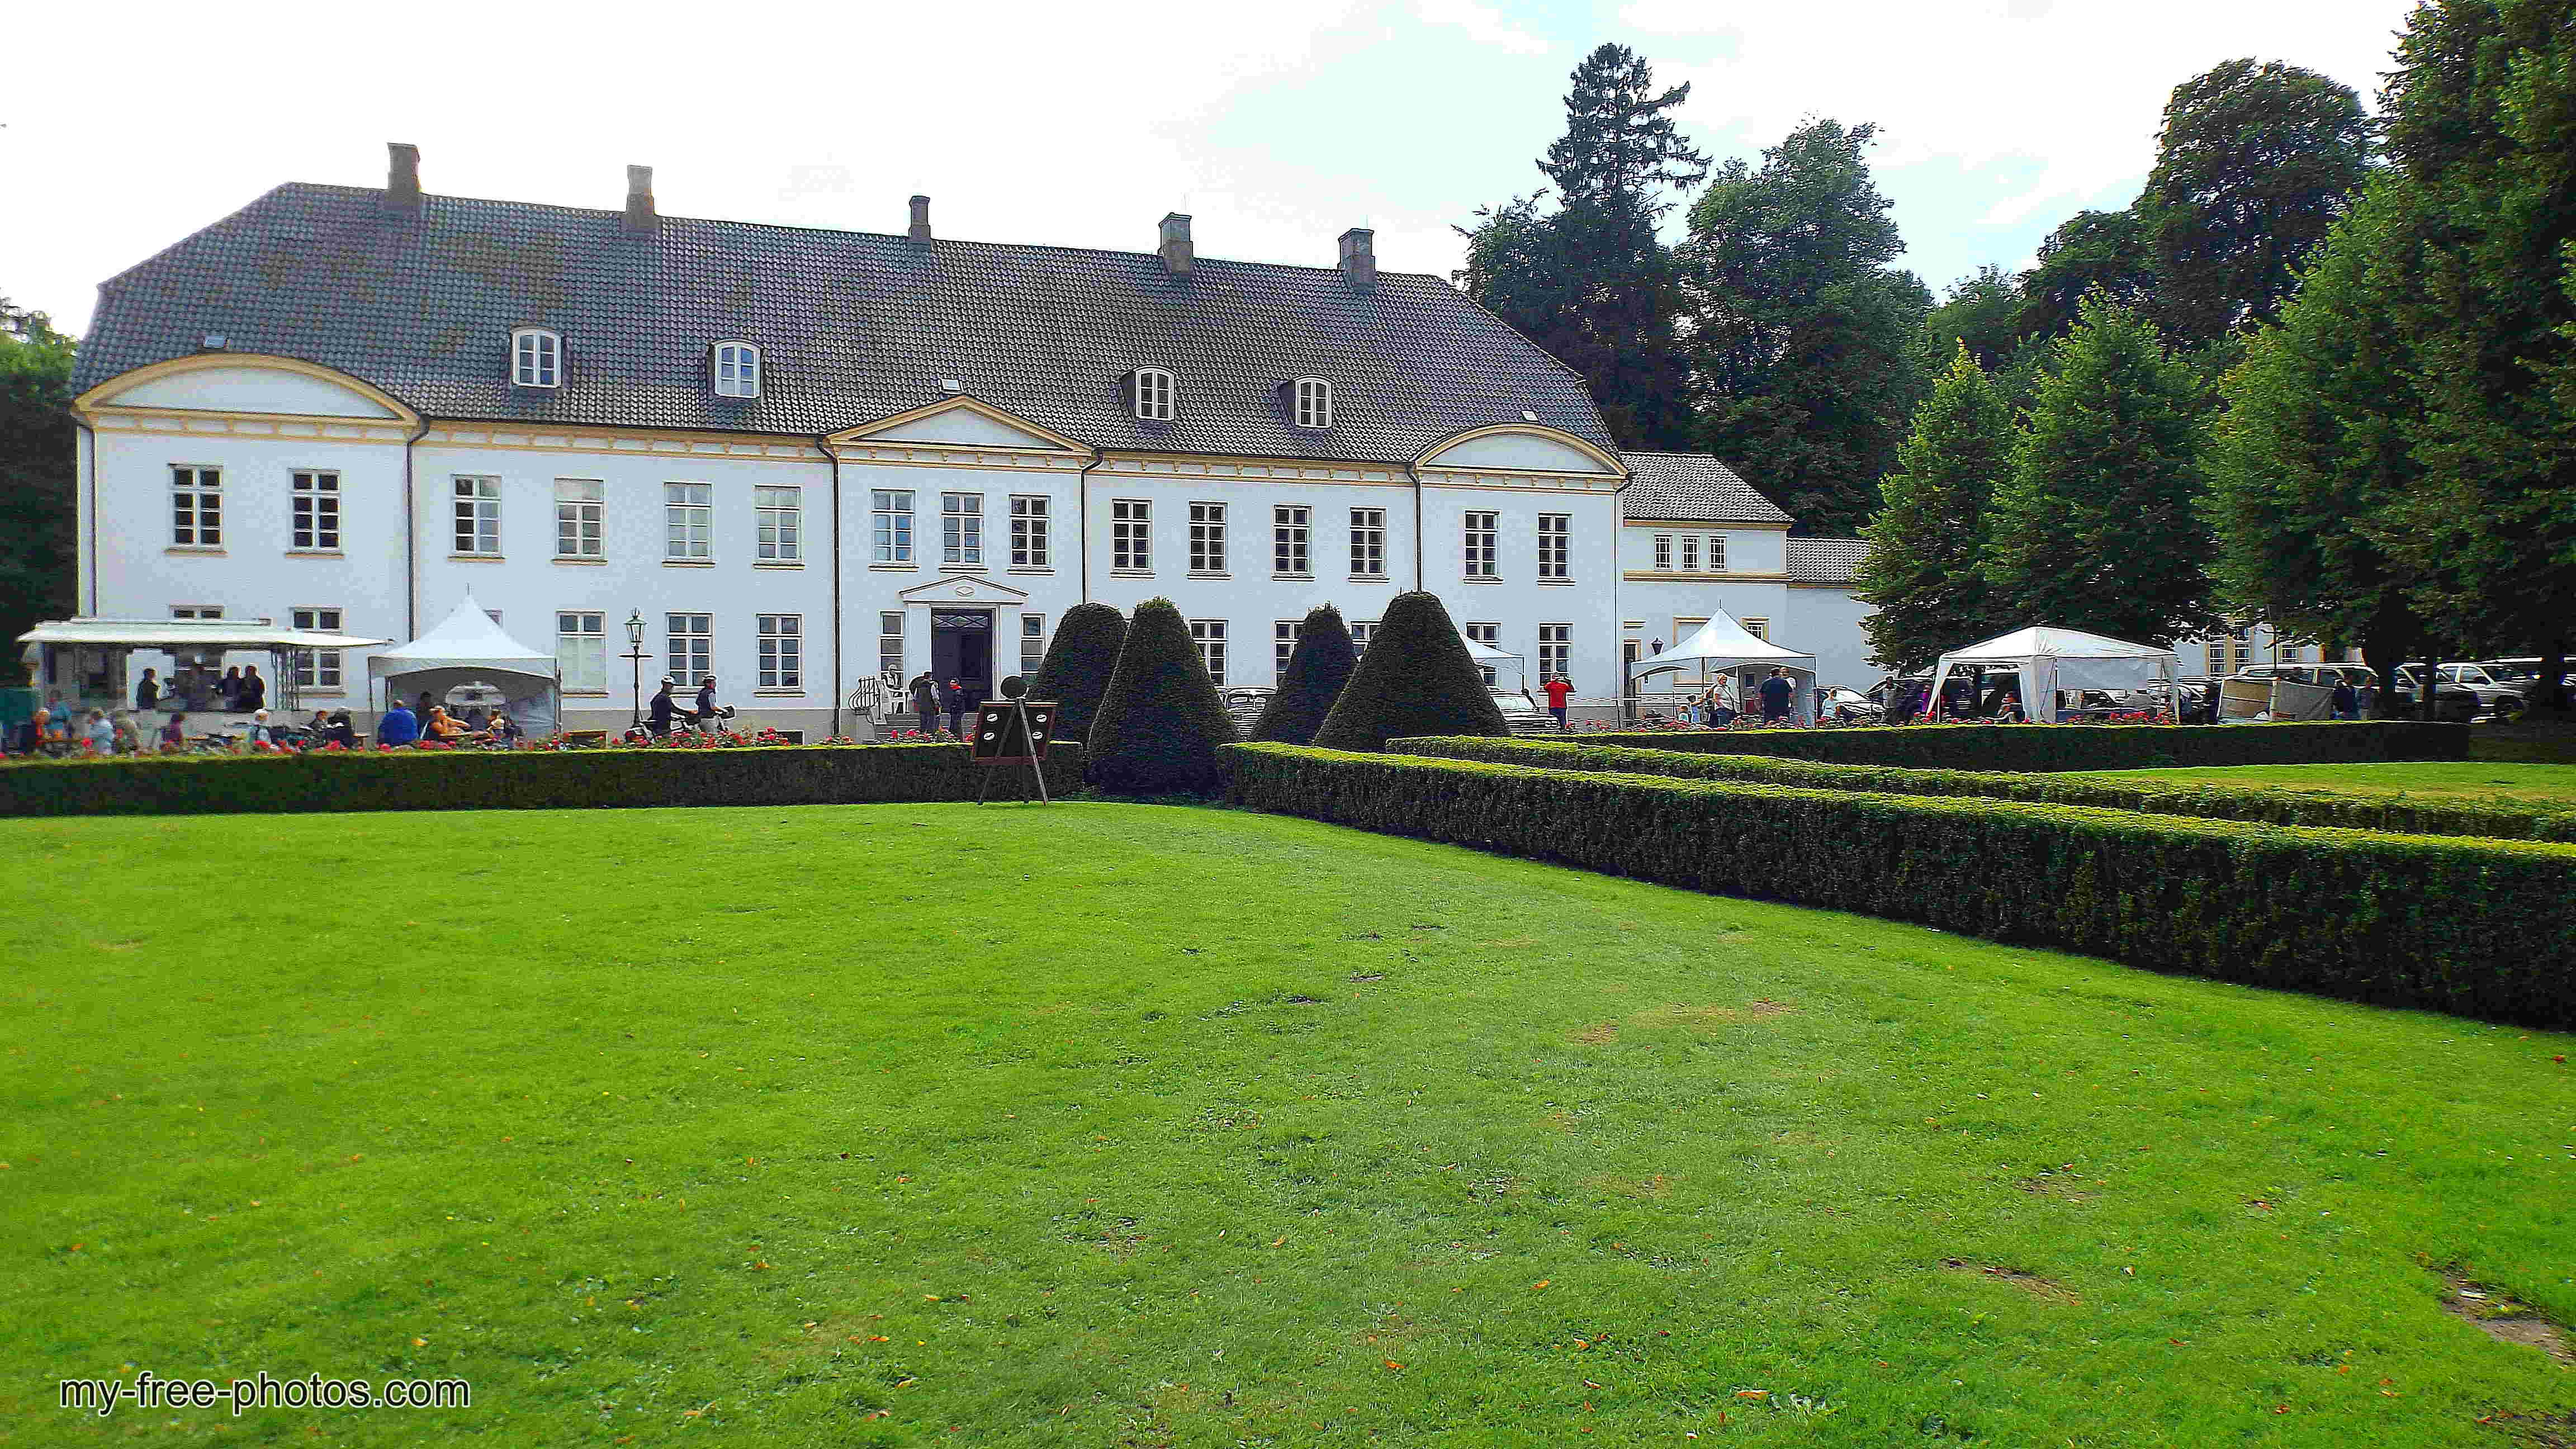 louisenlund castle